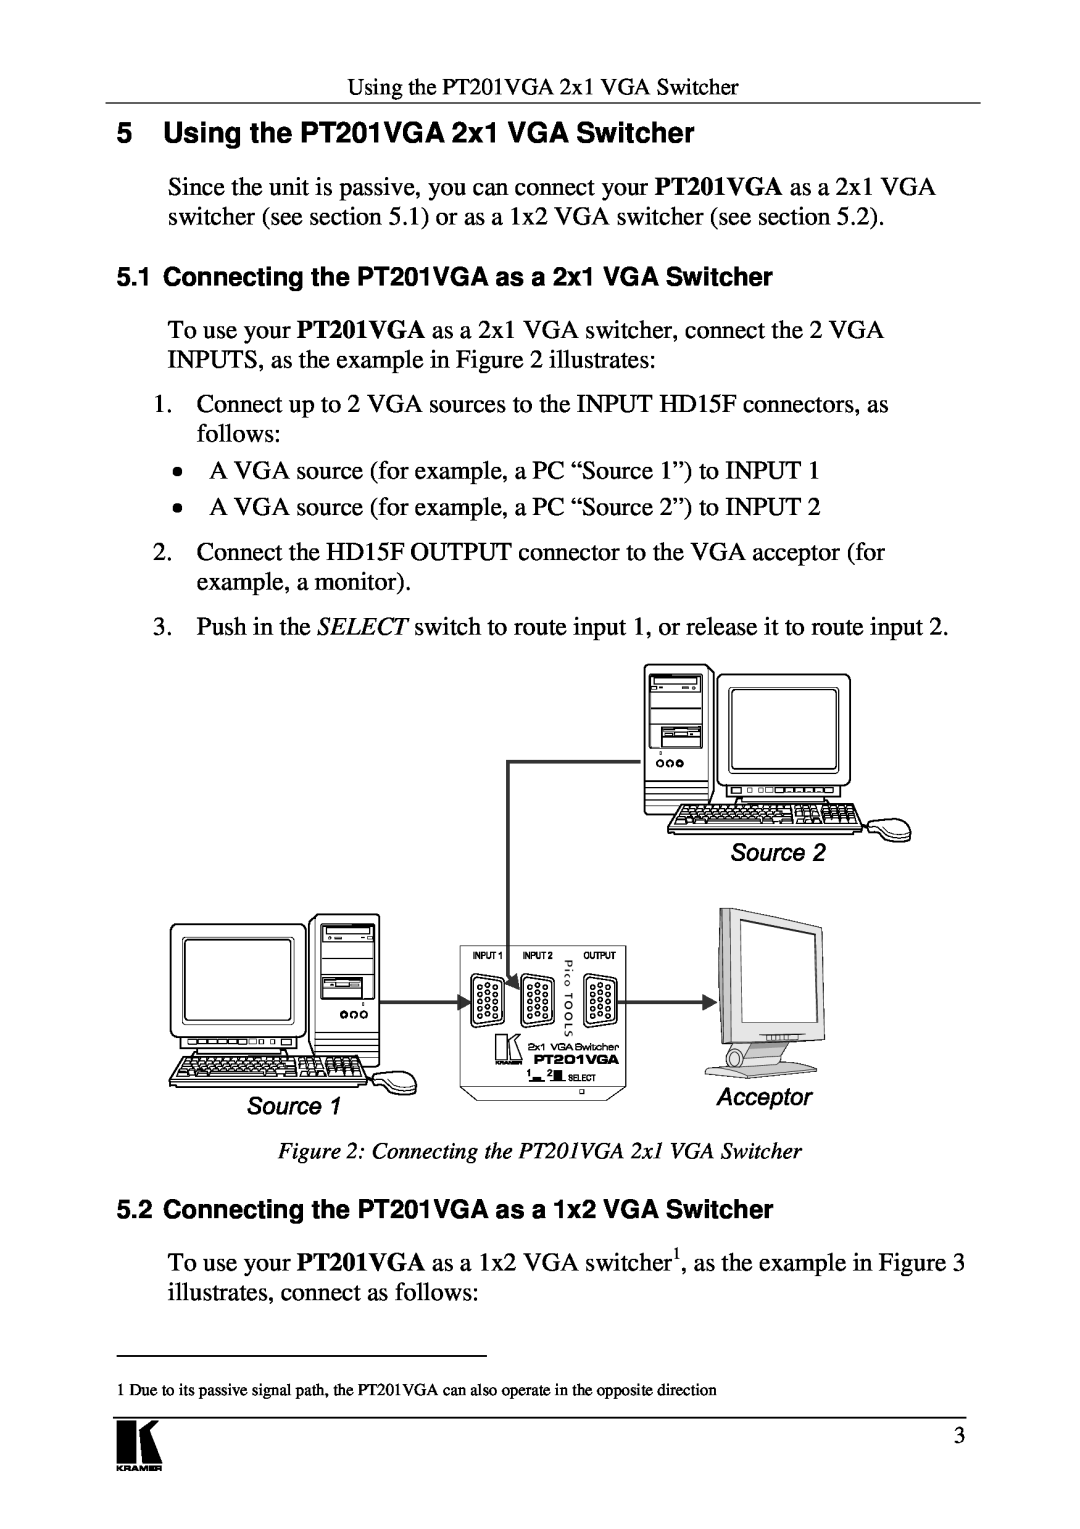 Kramer Electronics user manual Using the PT201VGA 2x1 VGA Switcher, Connecting the PT201VGA as a 2x1 VGA Switcher 